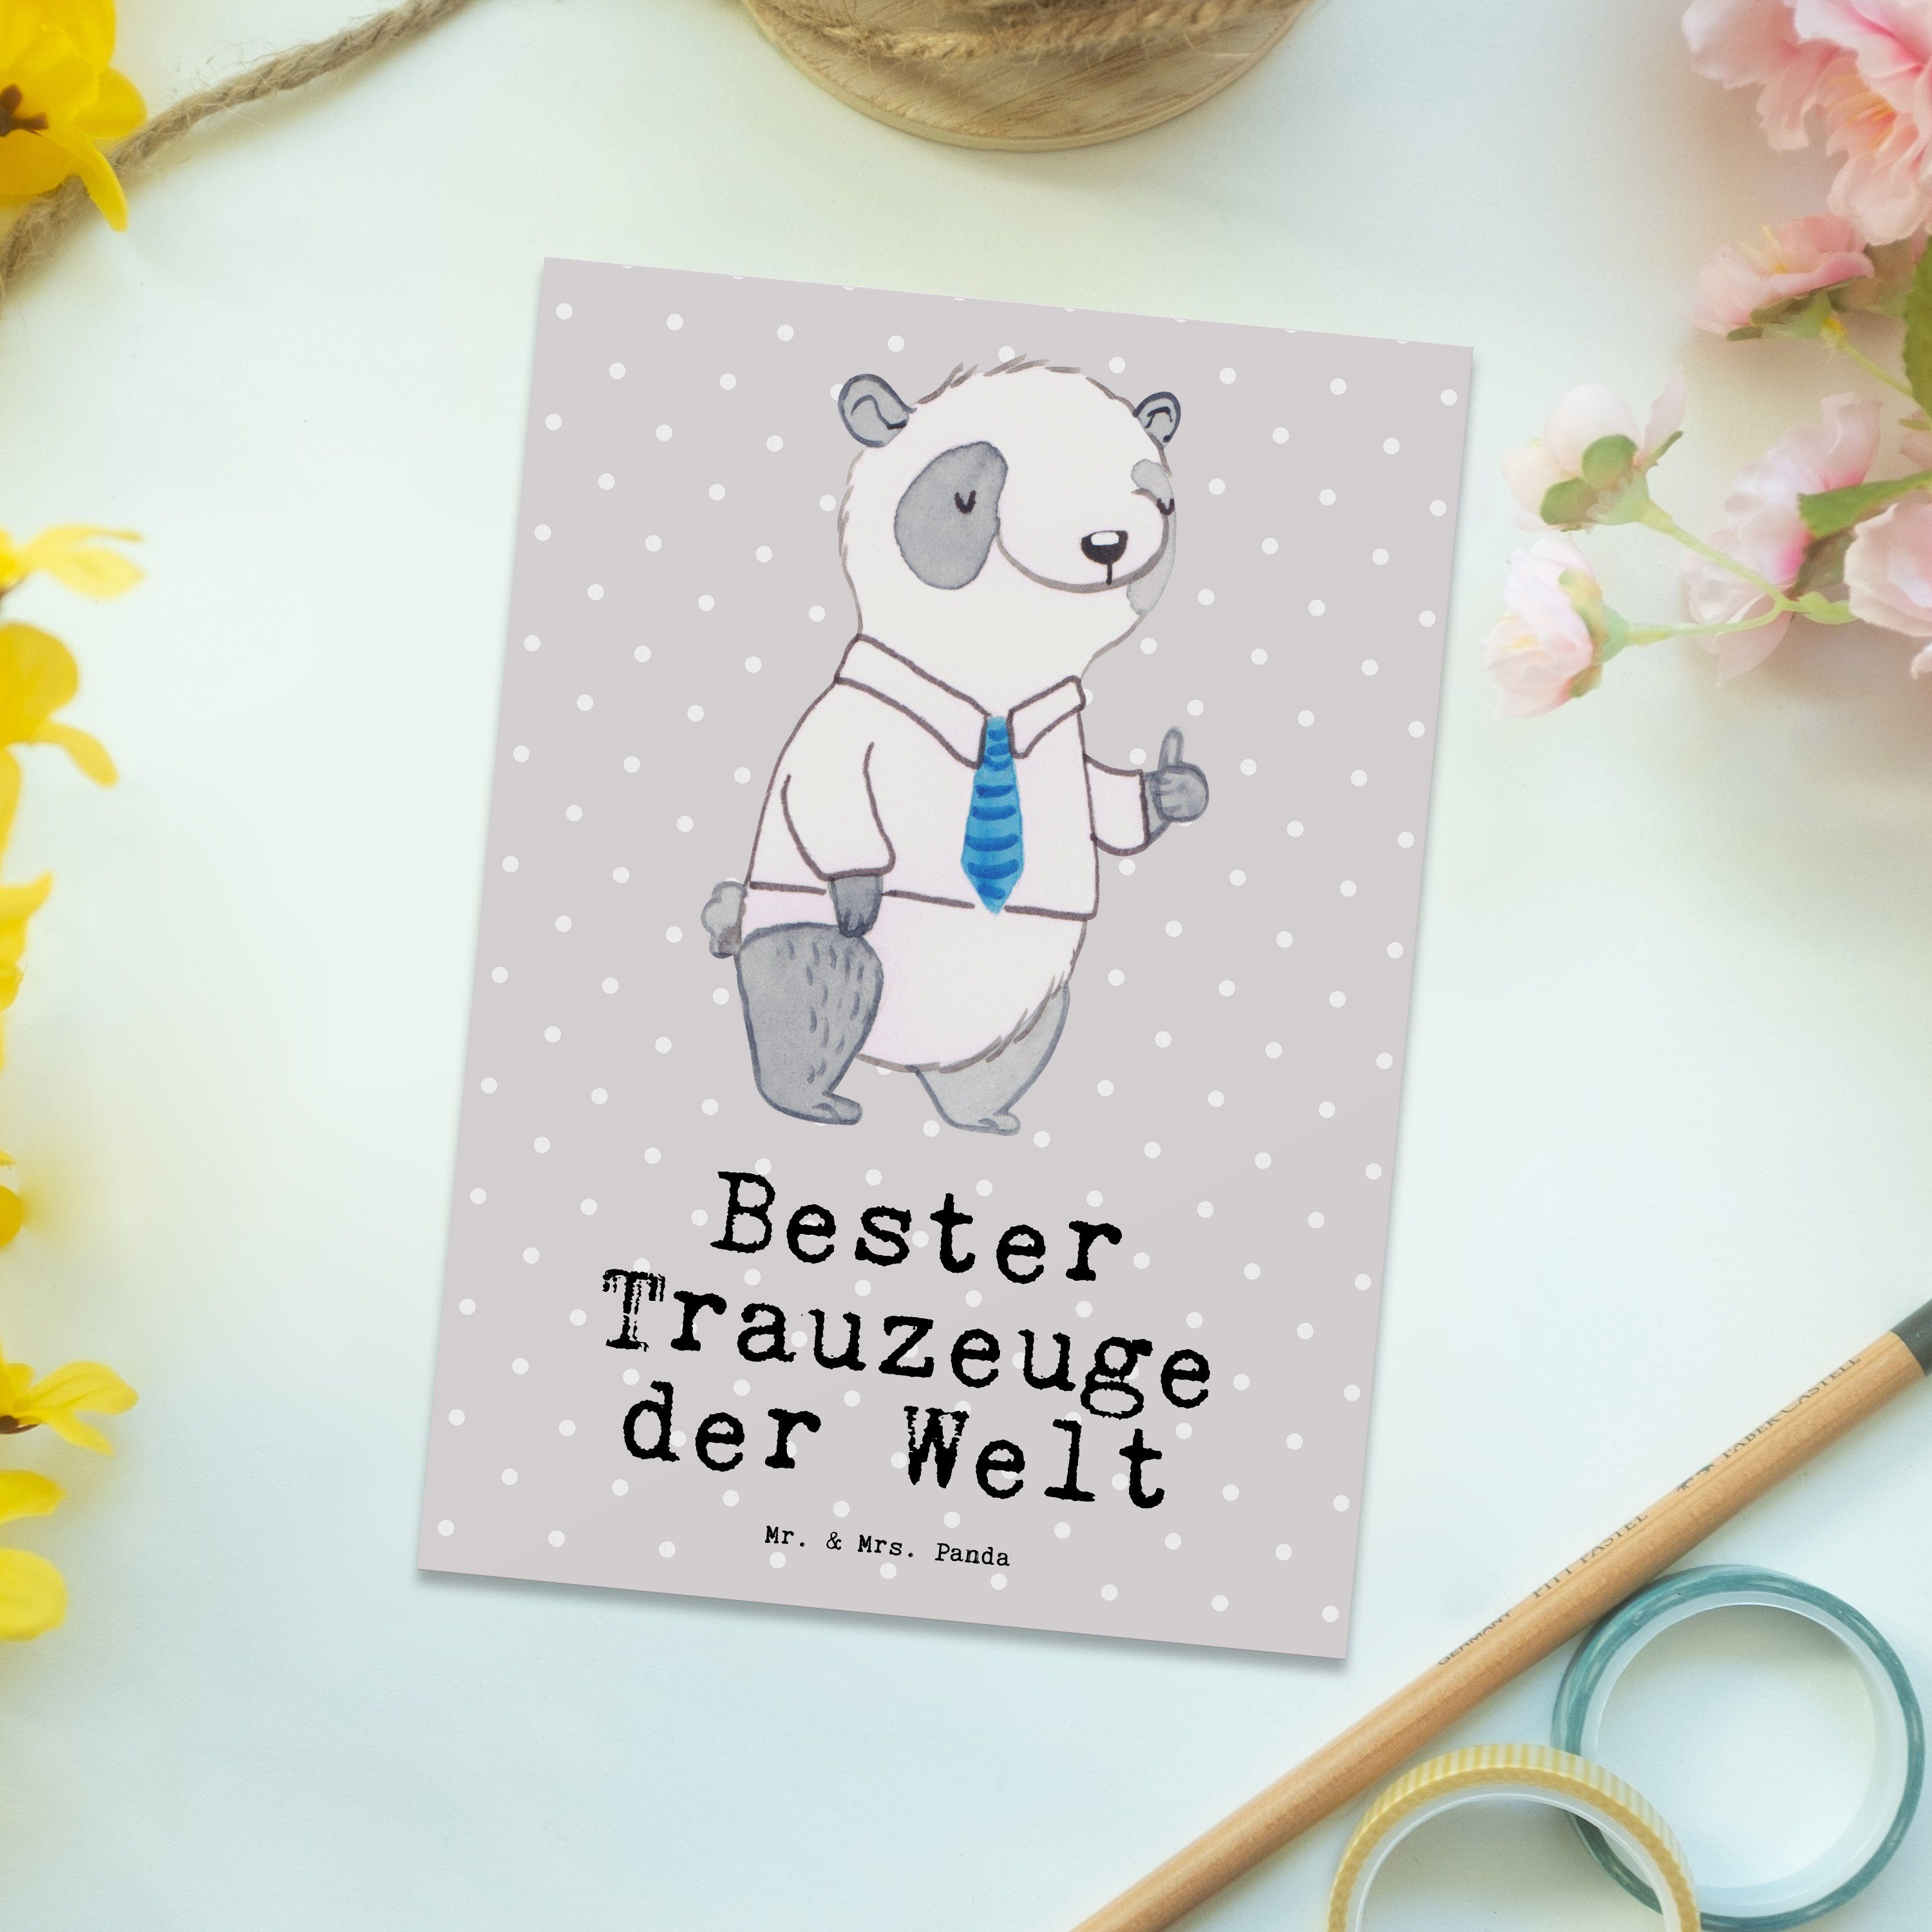 Trauzeuge & - Panda Bester - Panda Grau Geschenk, Pastell Postkarte Mrs. der Mr. Bräutigam Welt